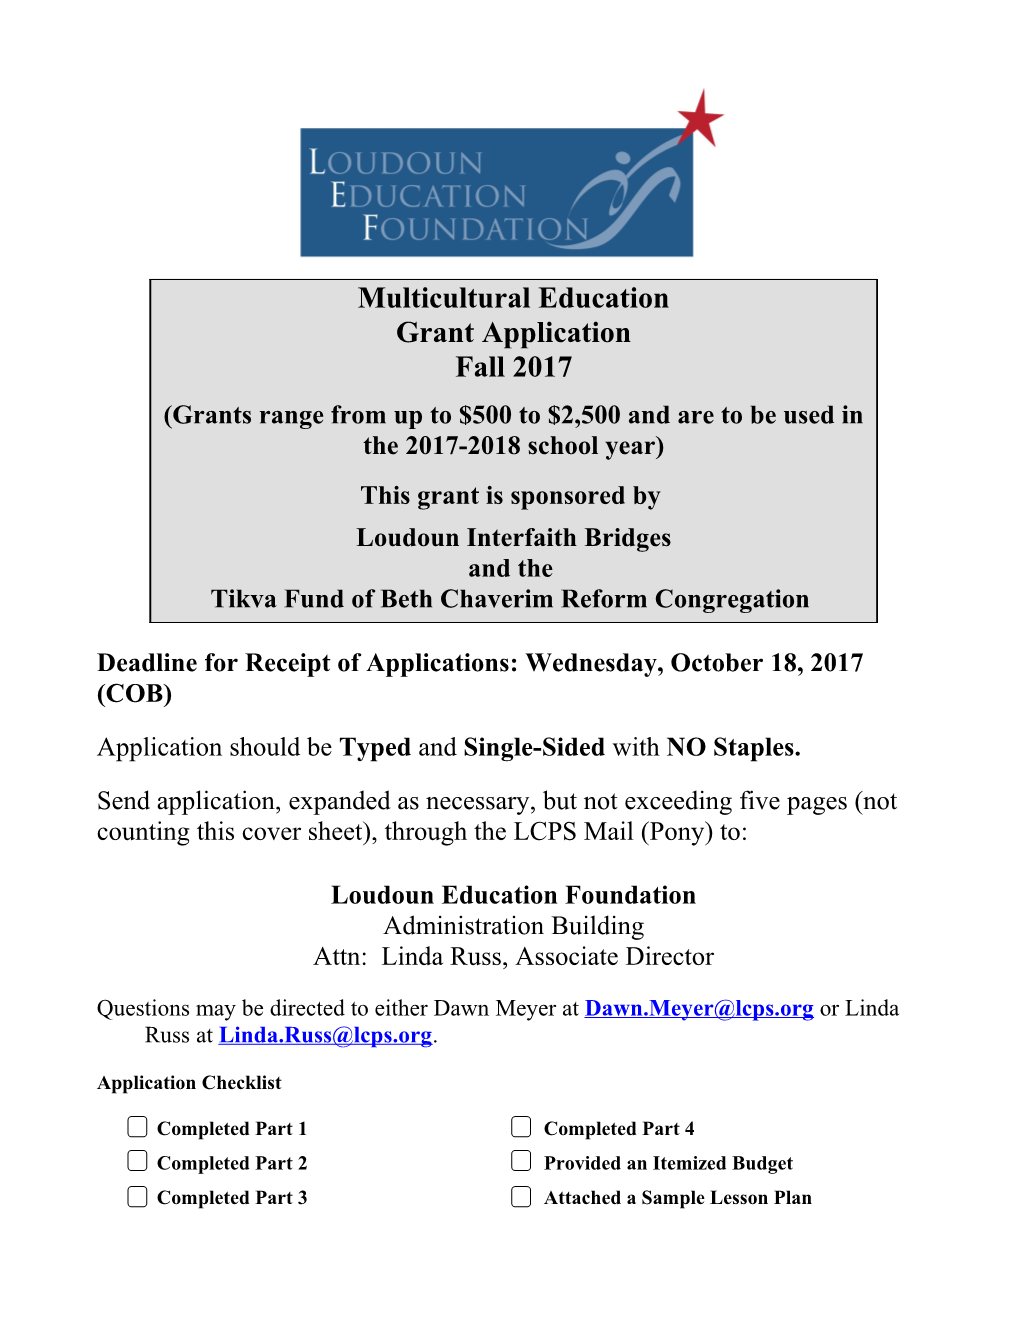 Deadline for Receipt of Applications: Wednesday, October 18, 2017 (COB)